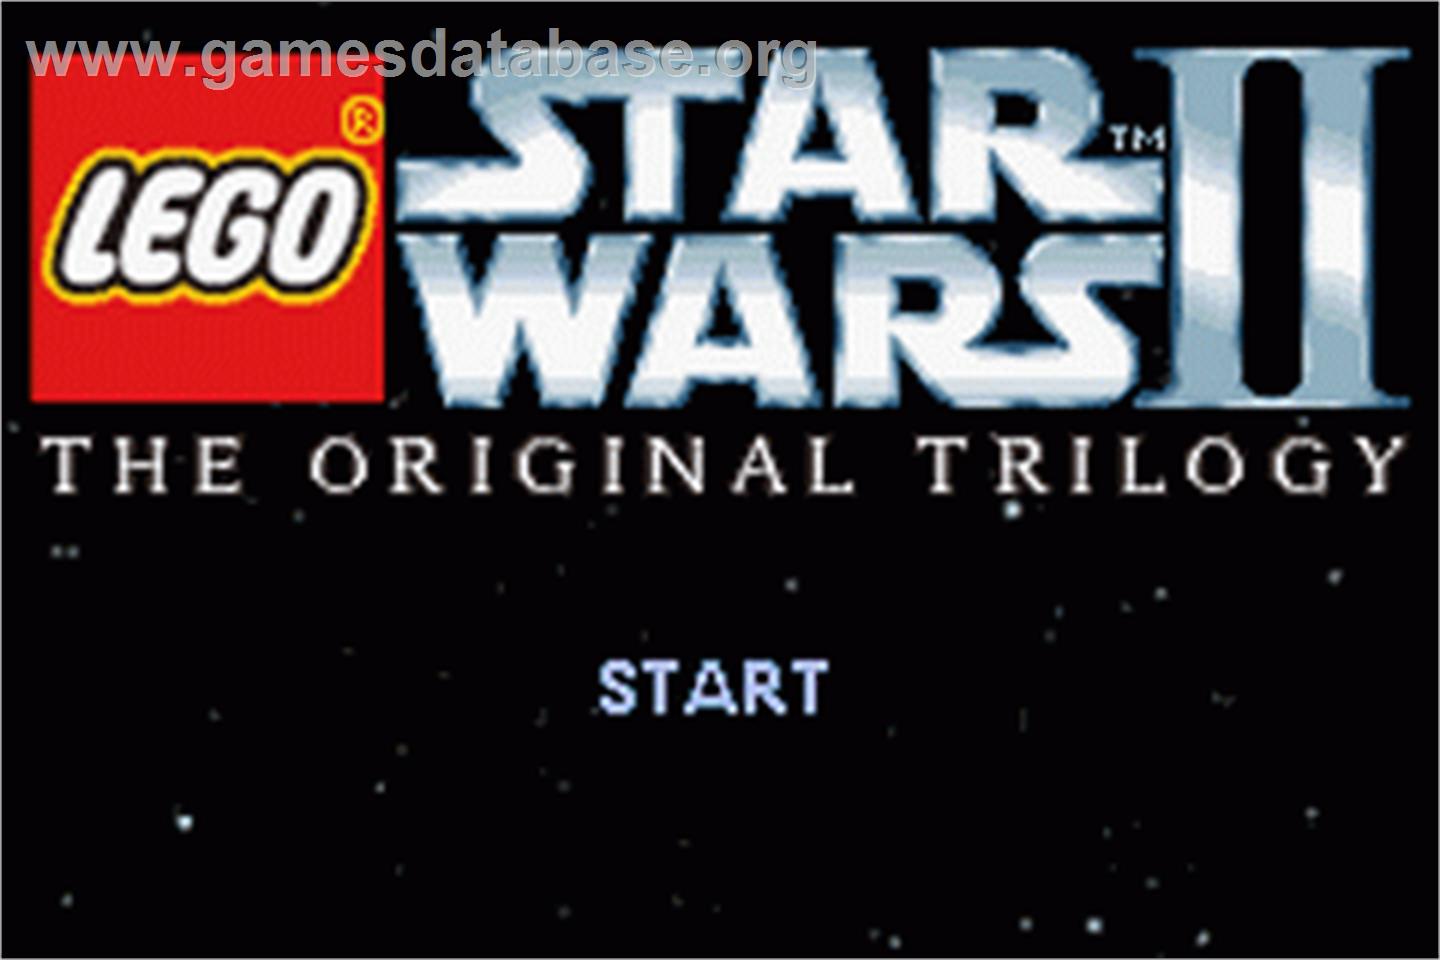 LEGO Star Wars 2: The Original Trilogy - Nintendo Game Boy Advance - Artwork - Title Screen